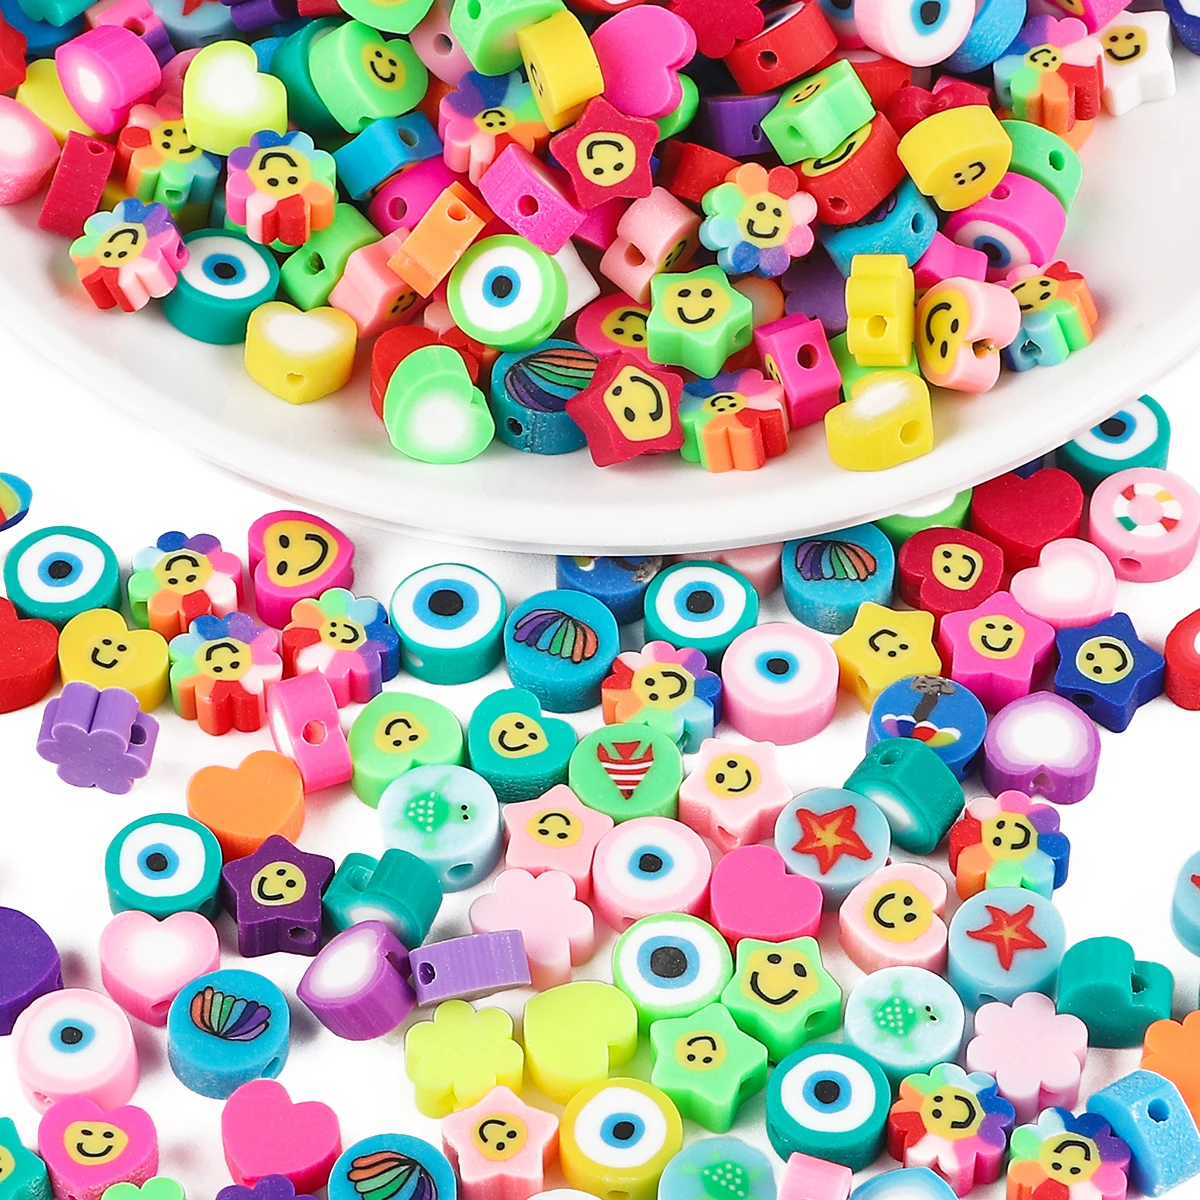 Bulk Beads Fruit Beads Polymer Clay Fruit Beads Assorted Beads 50 Pieces Wholesale  Beads 